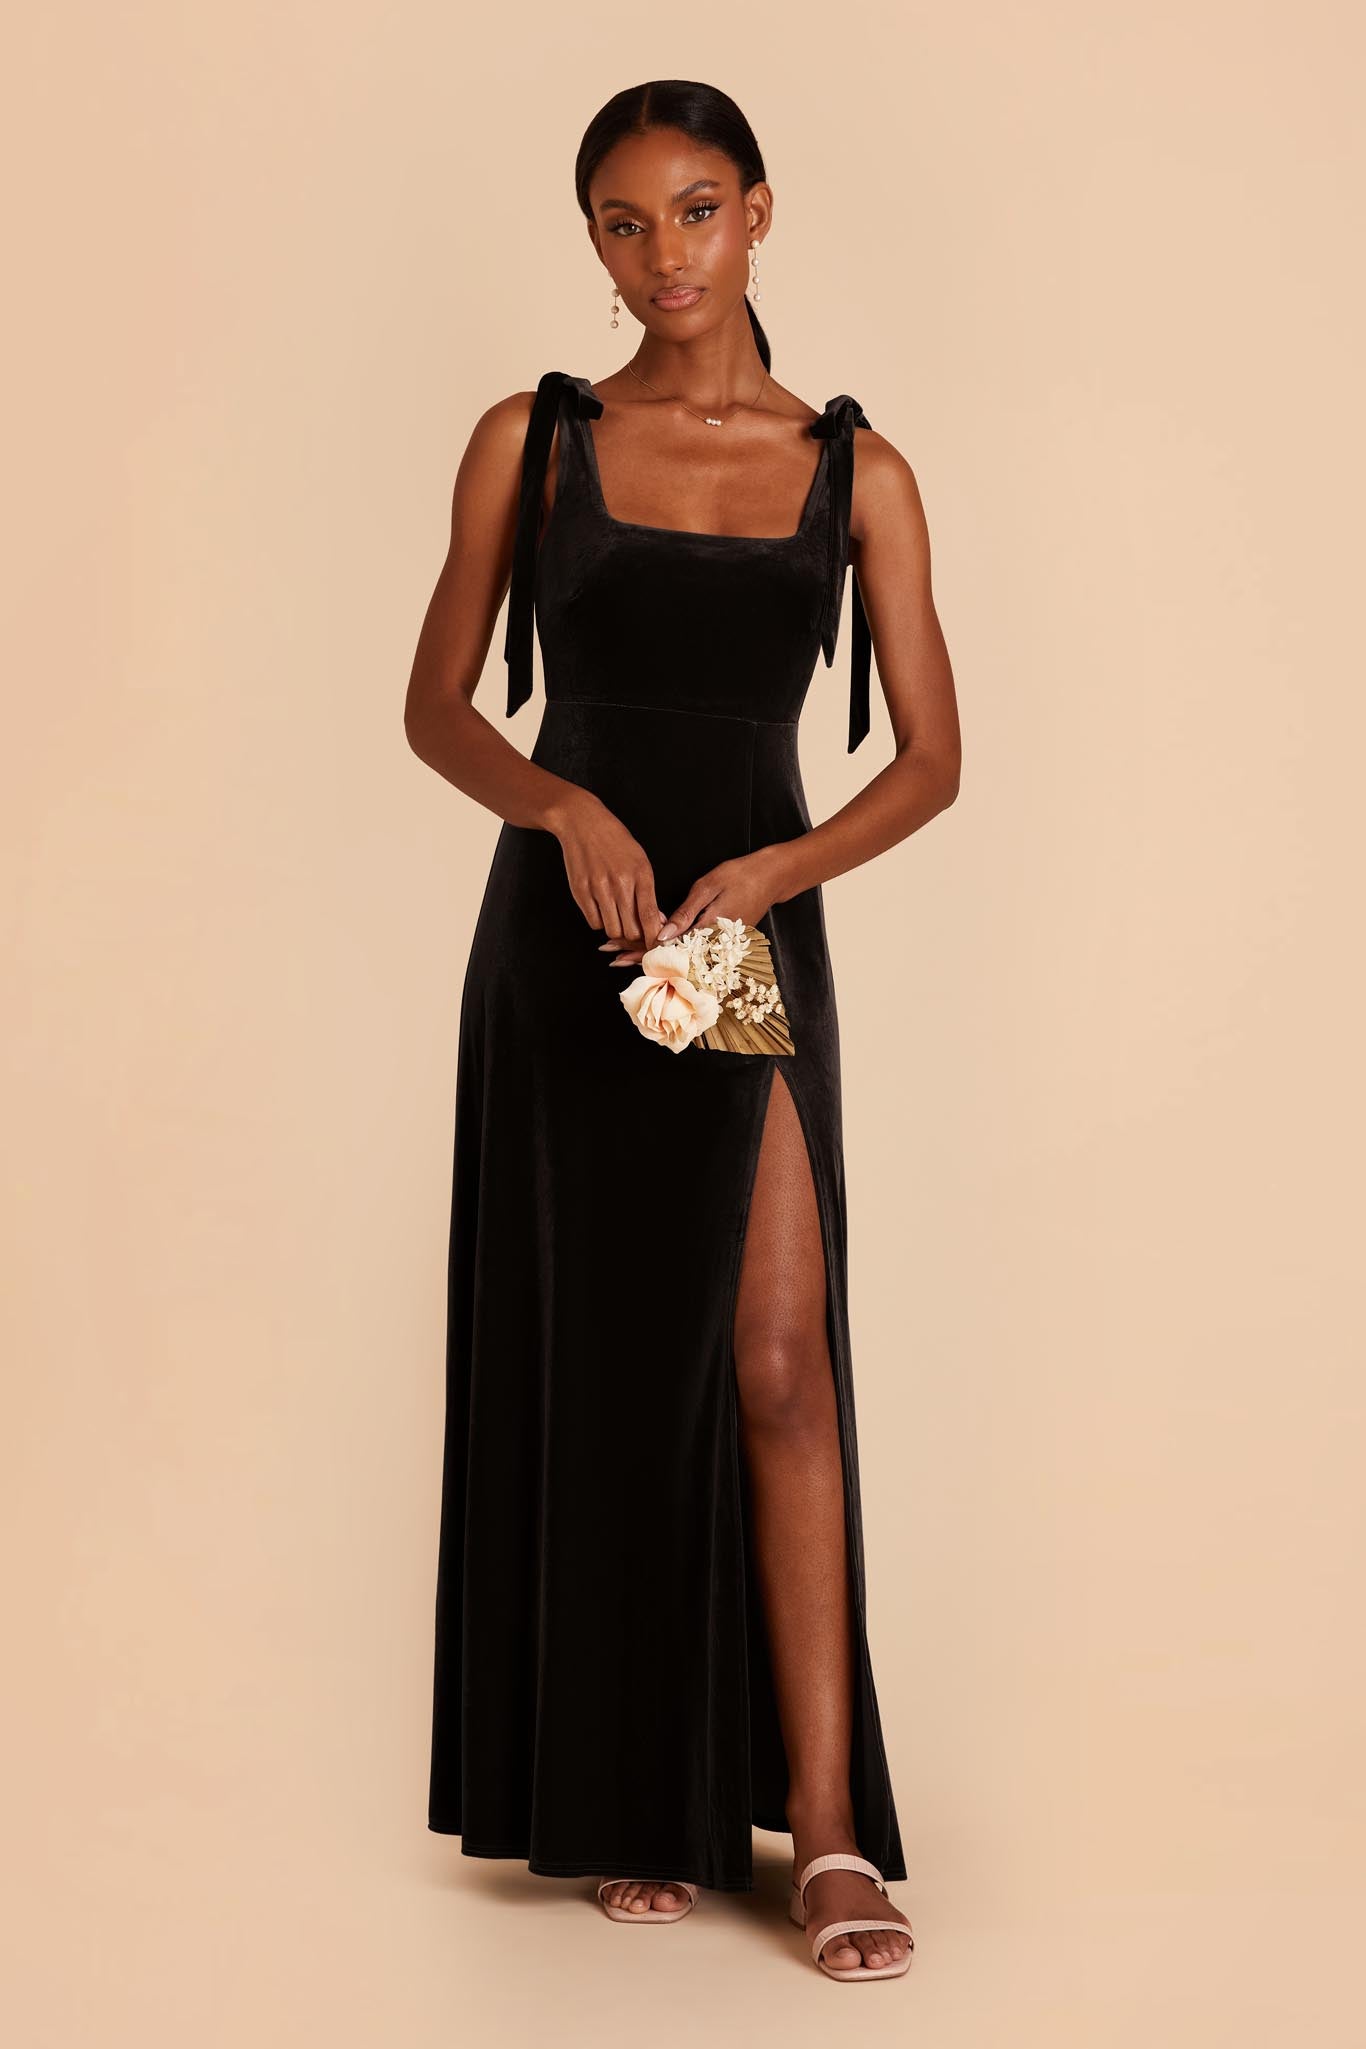 Black Alex Velvet Dress by Birdy Grey